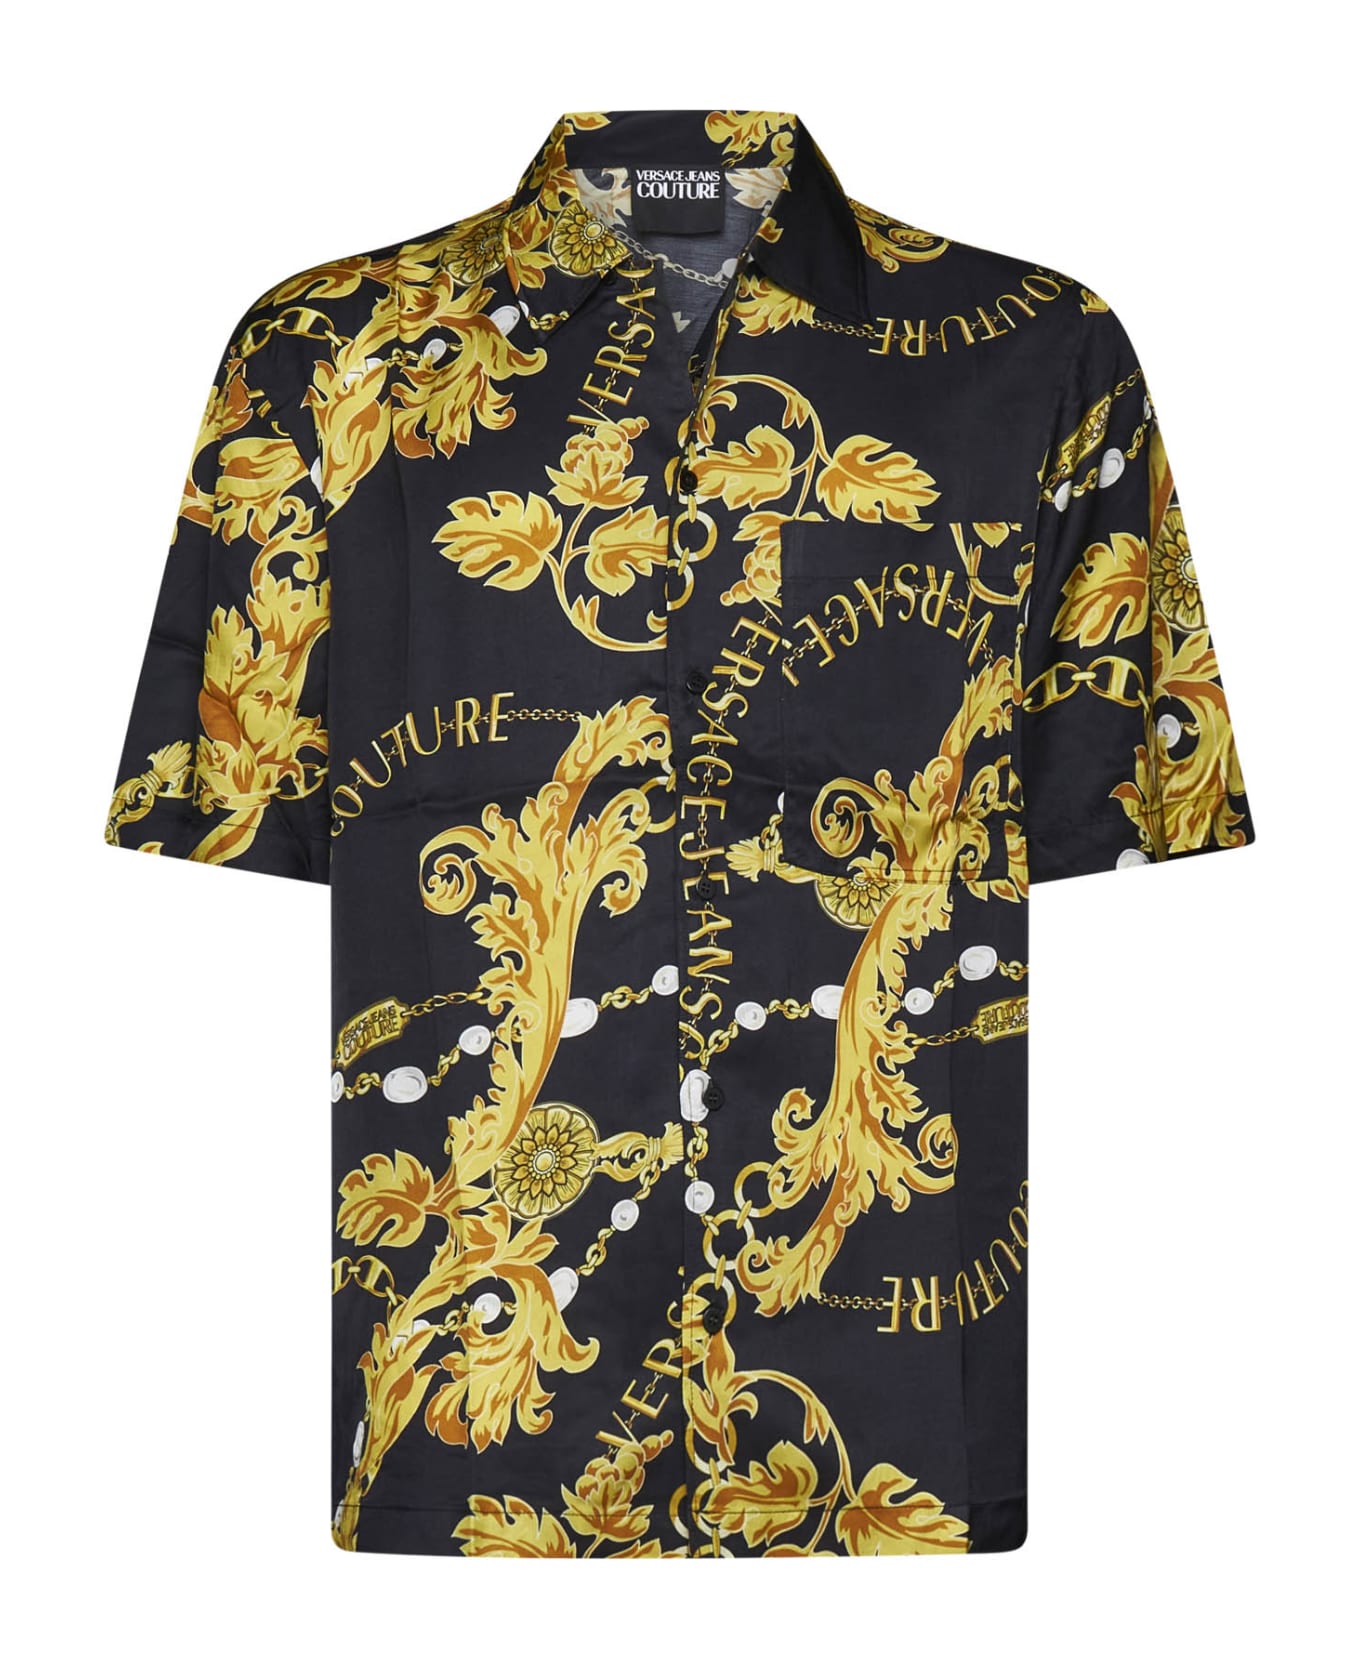 Versace Jeans Couture Baroque Print Shirt - Black gold